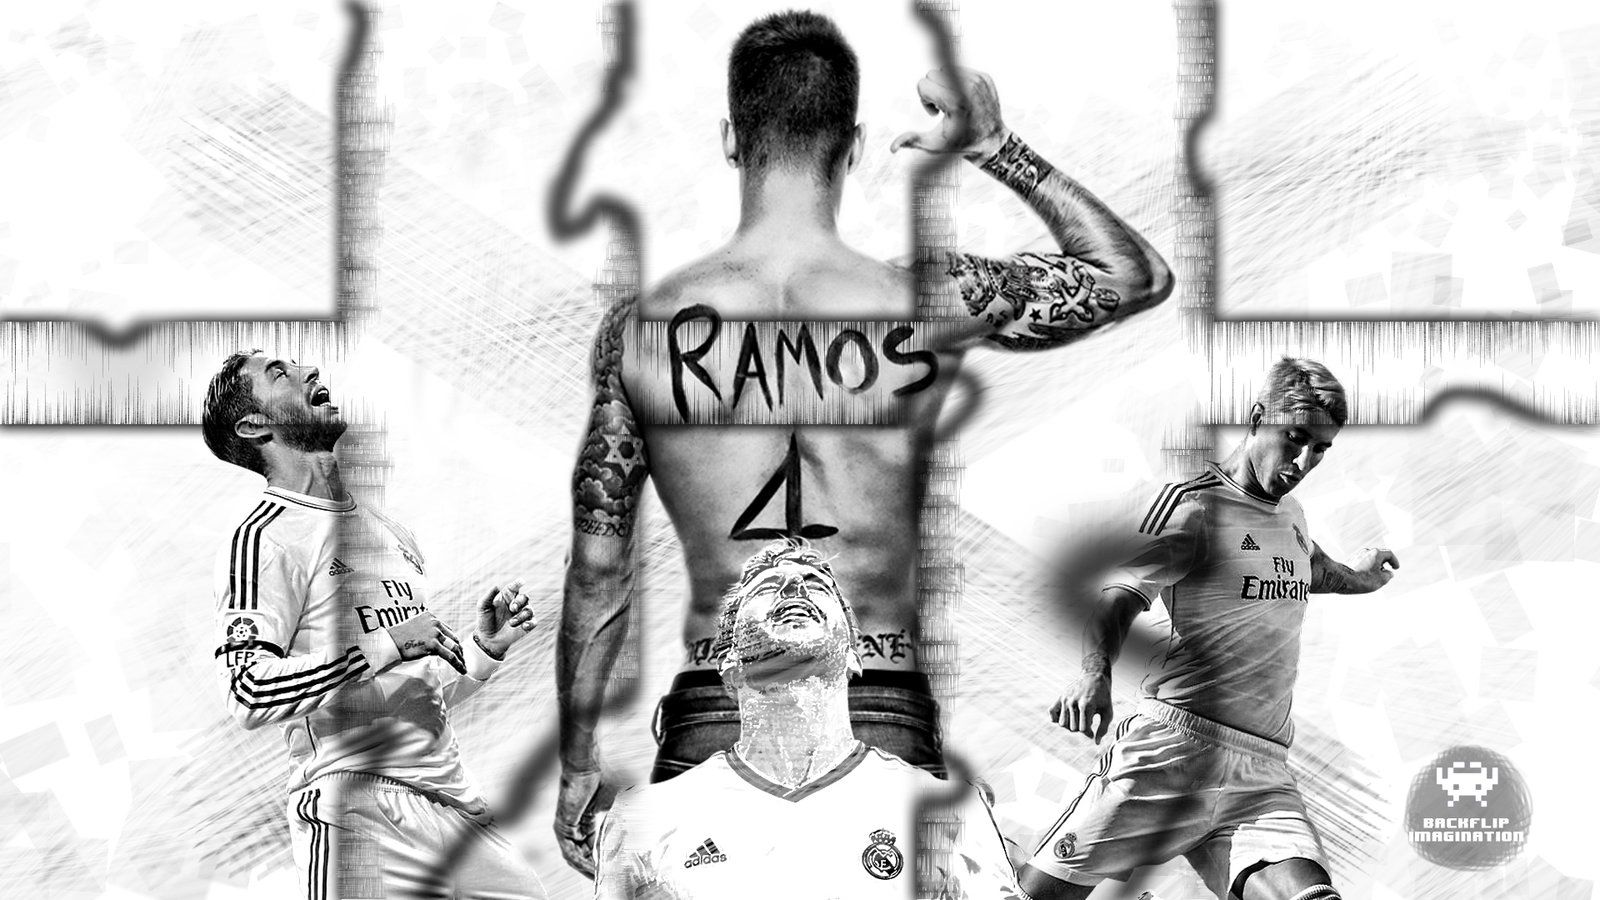 Sergio Ramos Wallpaper by Backflip Imagination by ...